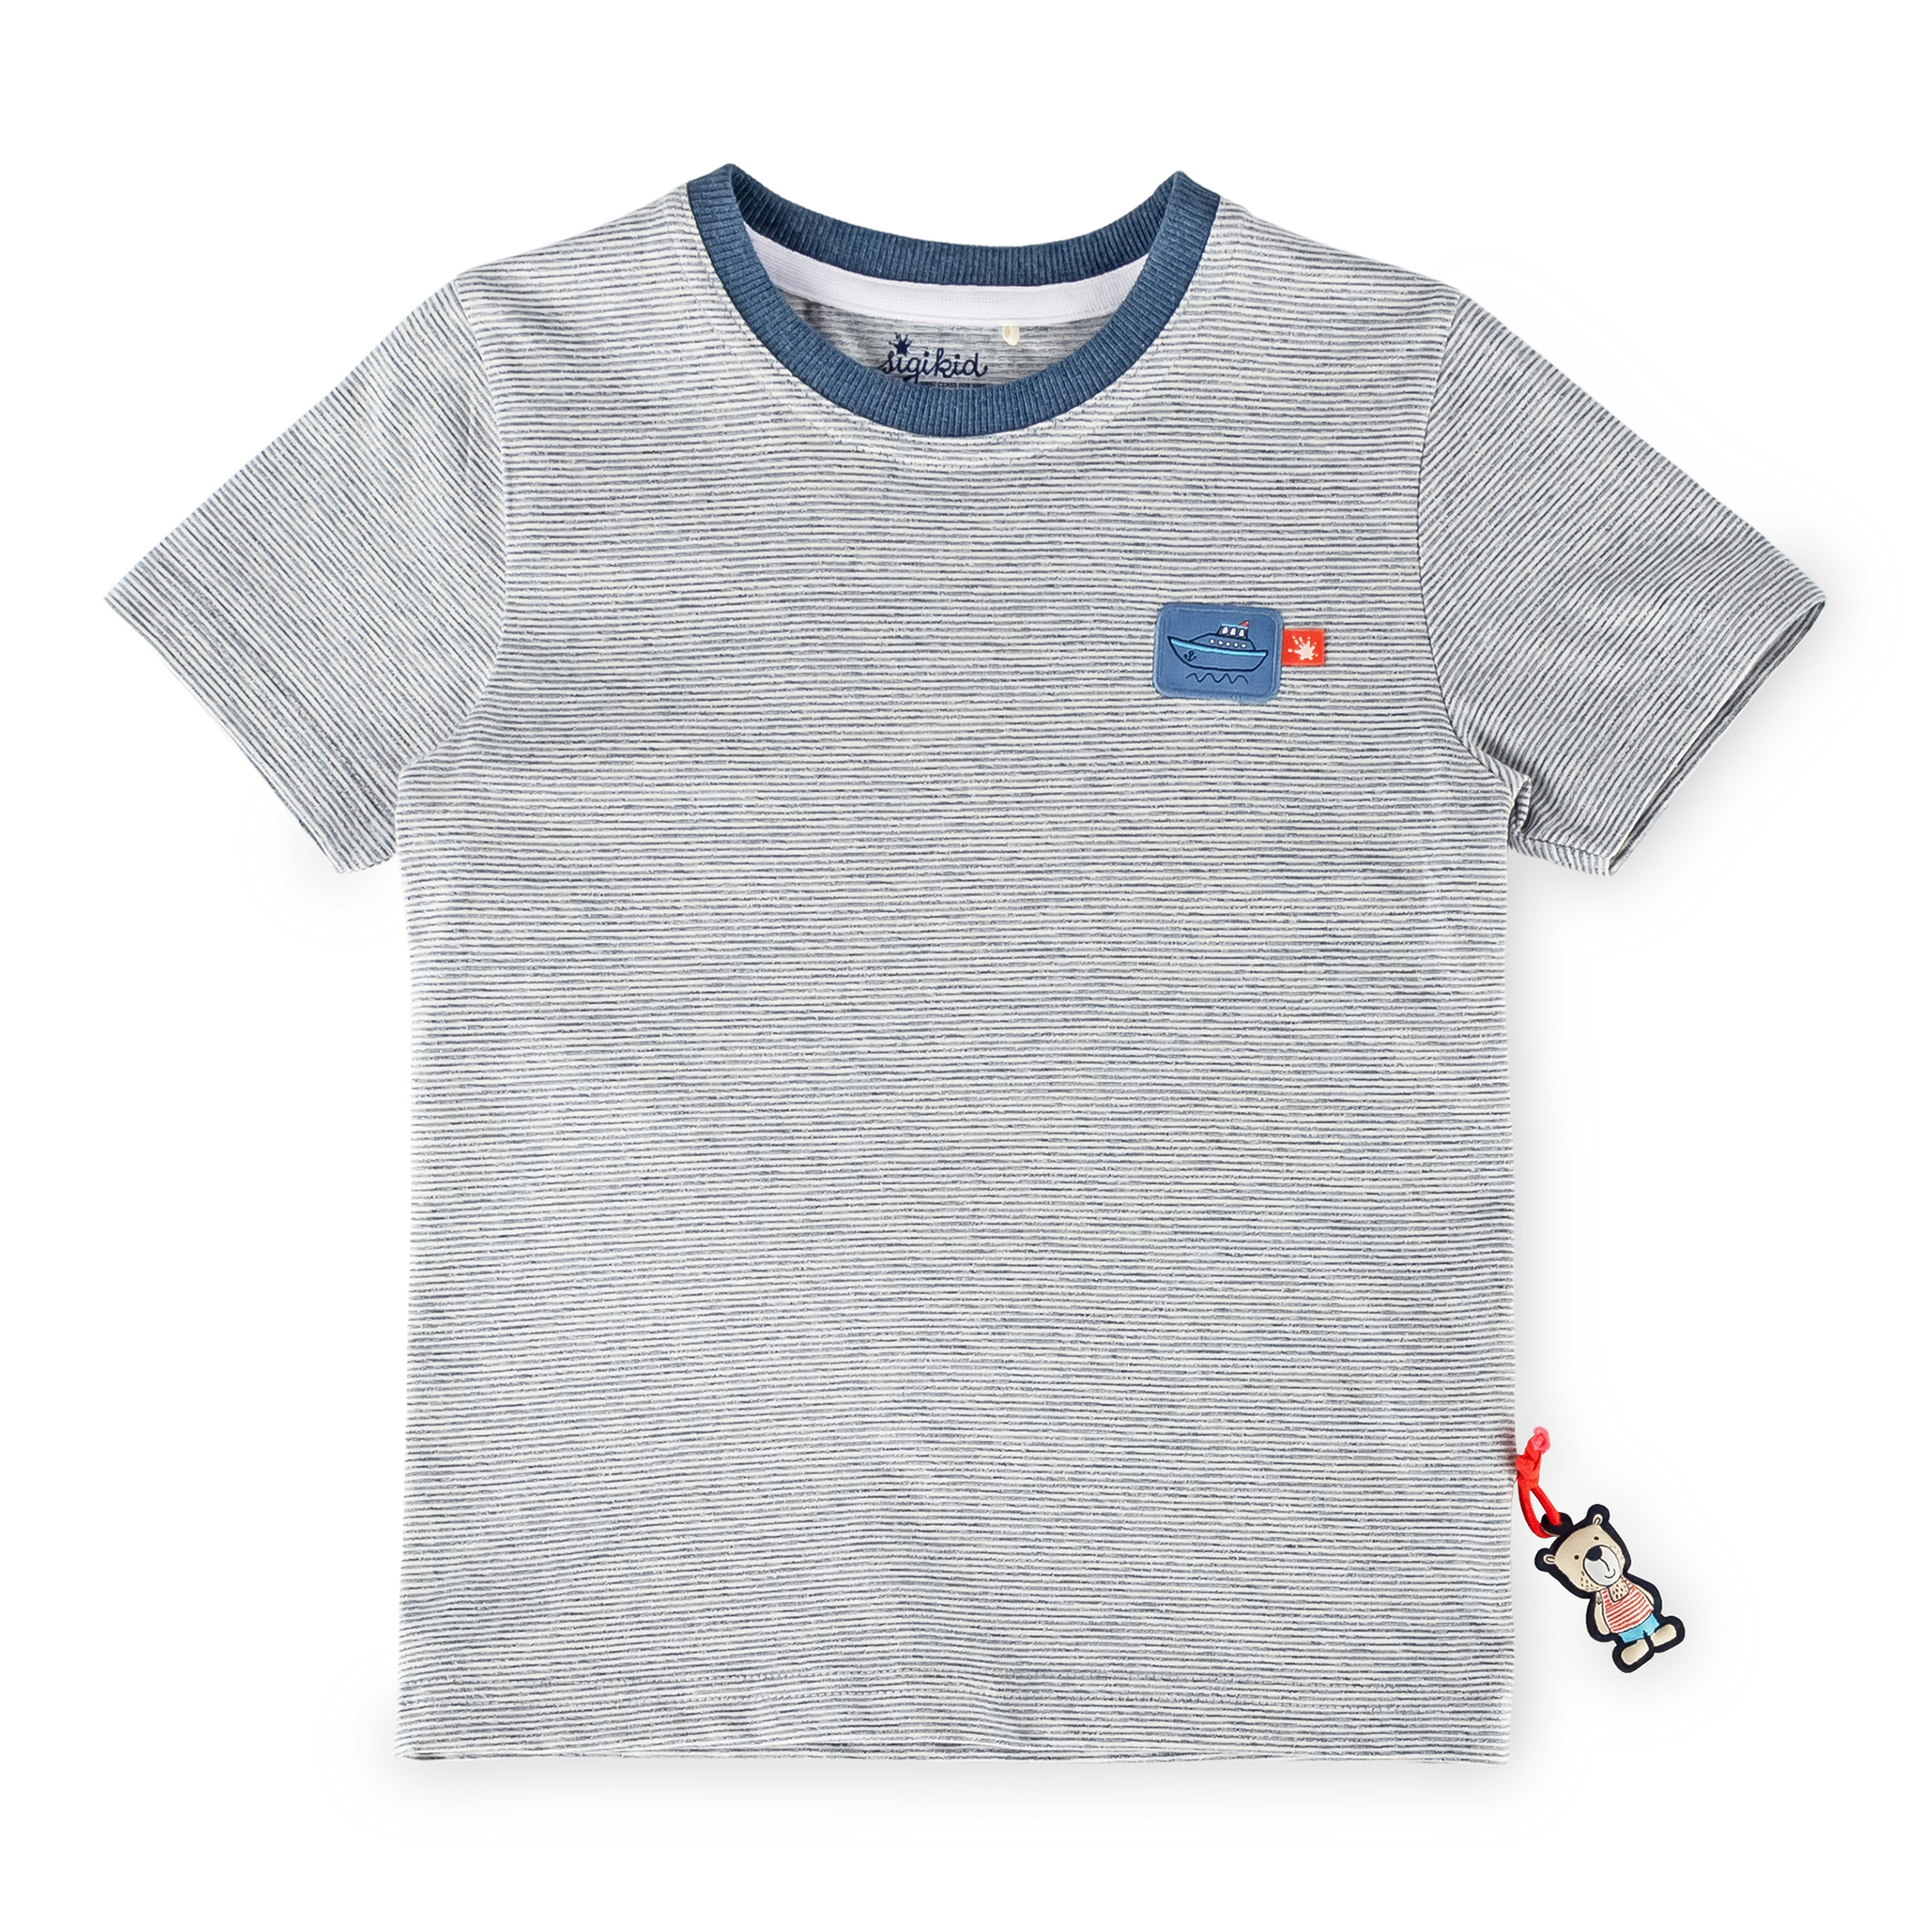 Blue marl Children's T-shirt boat patch